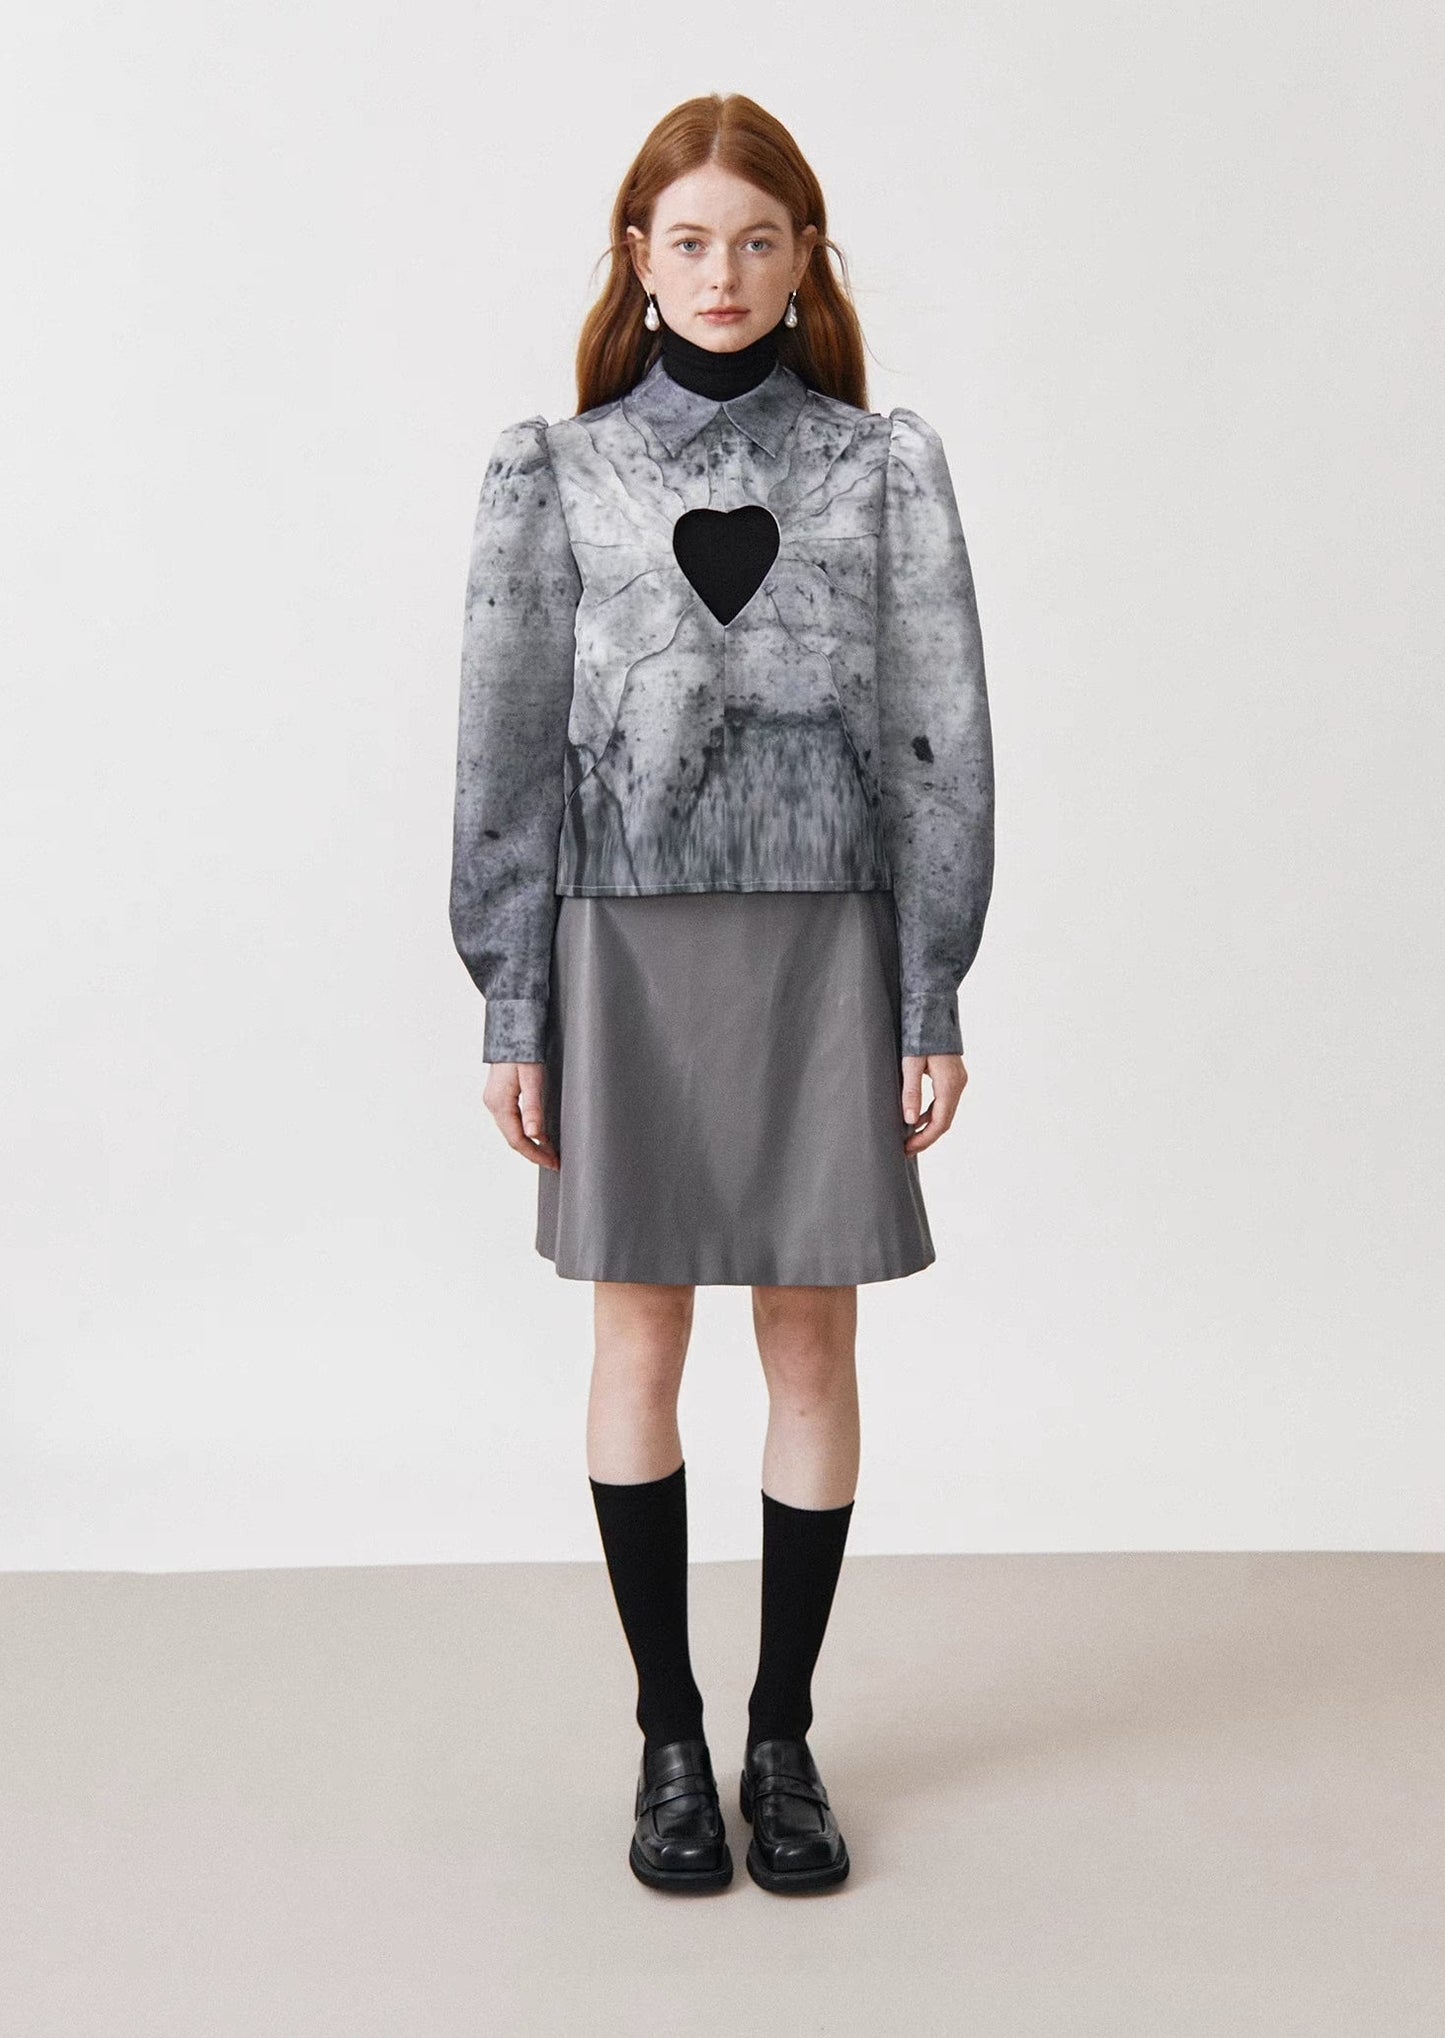 catwalk model silver gray print heart-shaped shirt